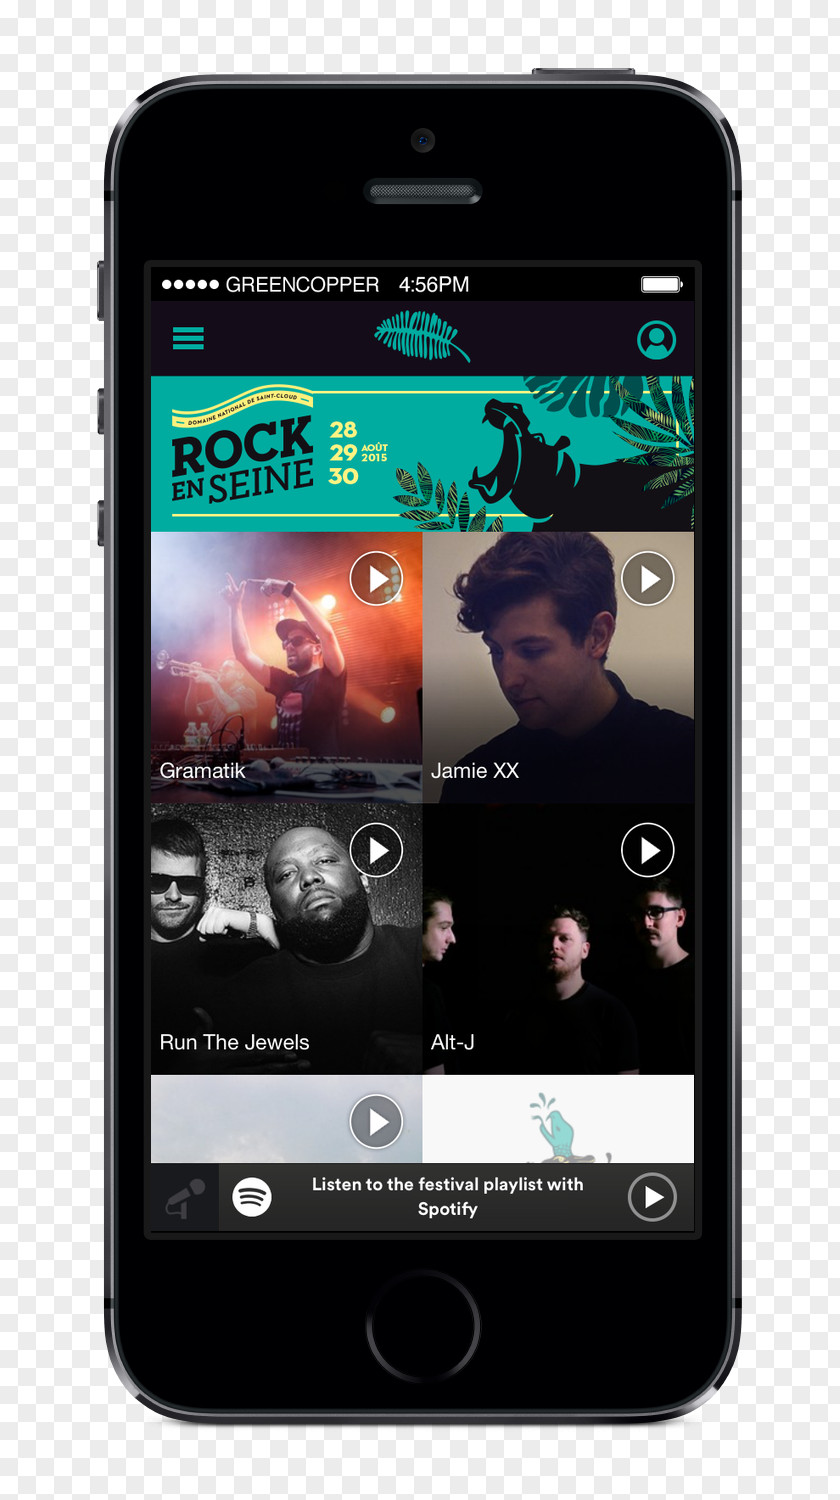 Rock Concert Feature Phone Smartphone 2015 En Seine Handheld Devices Mobile Phones PNG